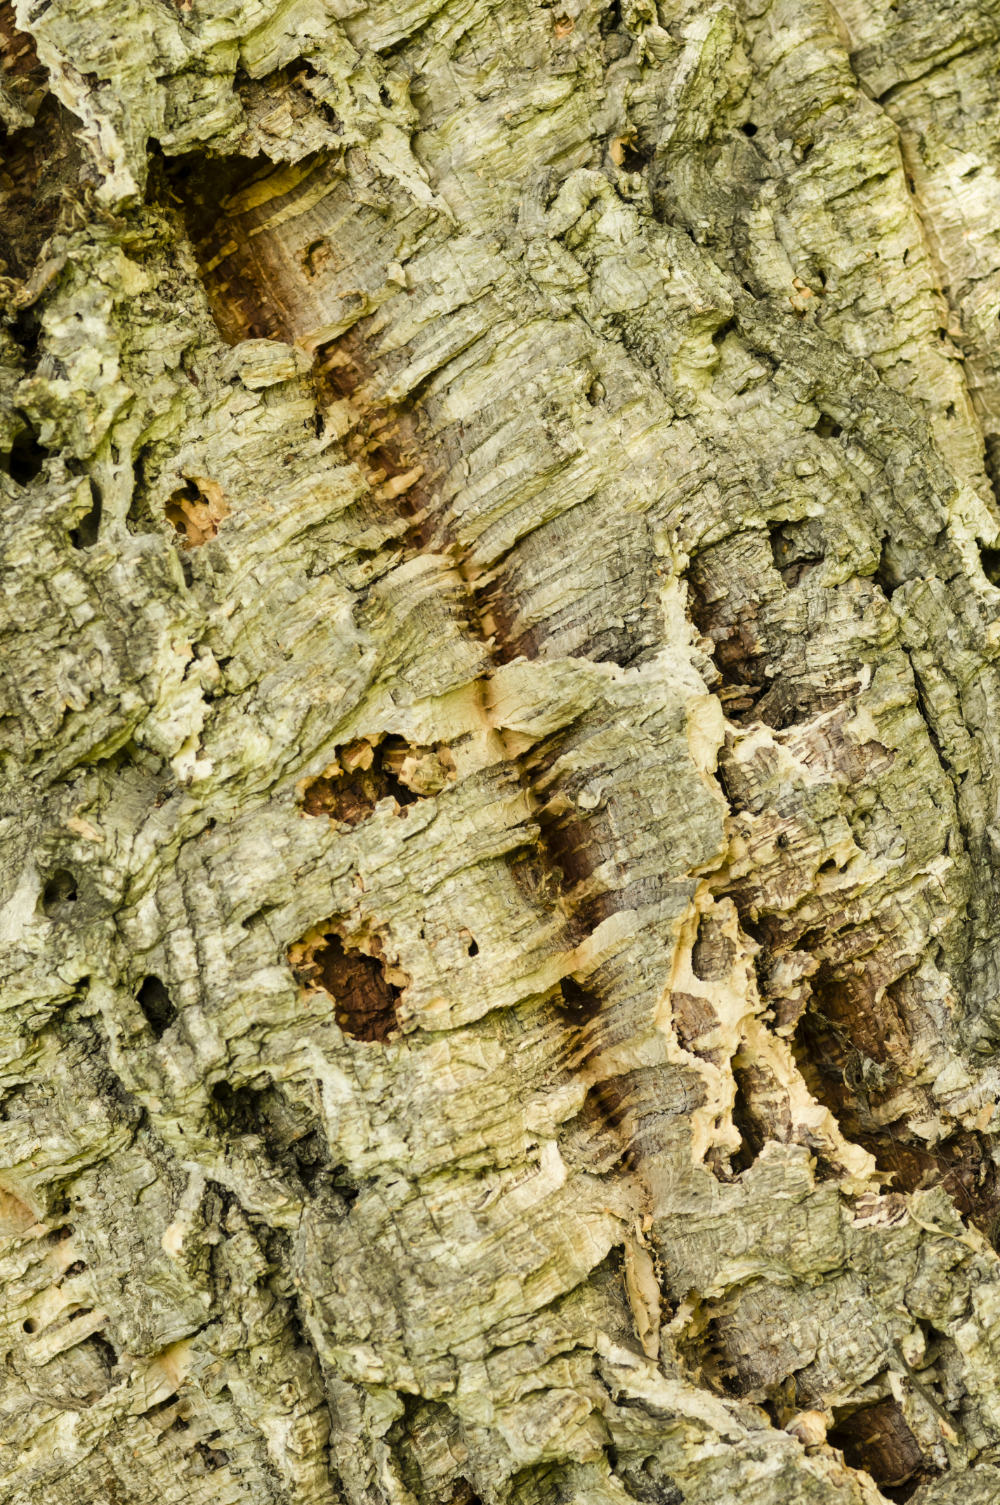 Bark of Quercus suber, cork oak tree